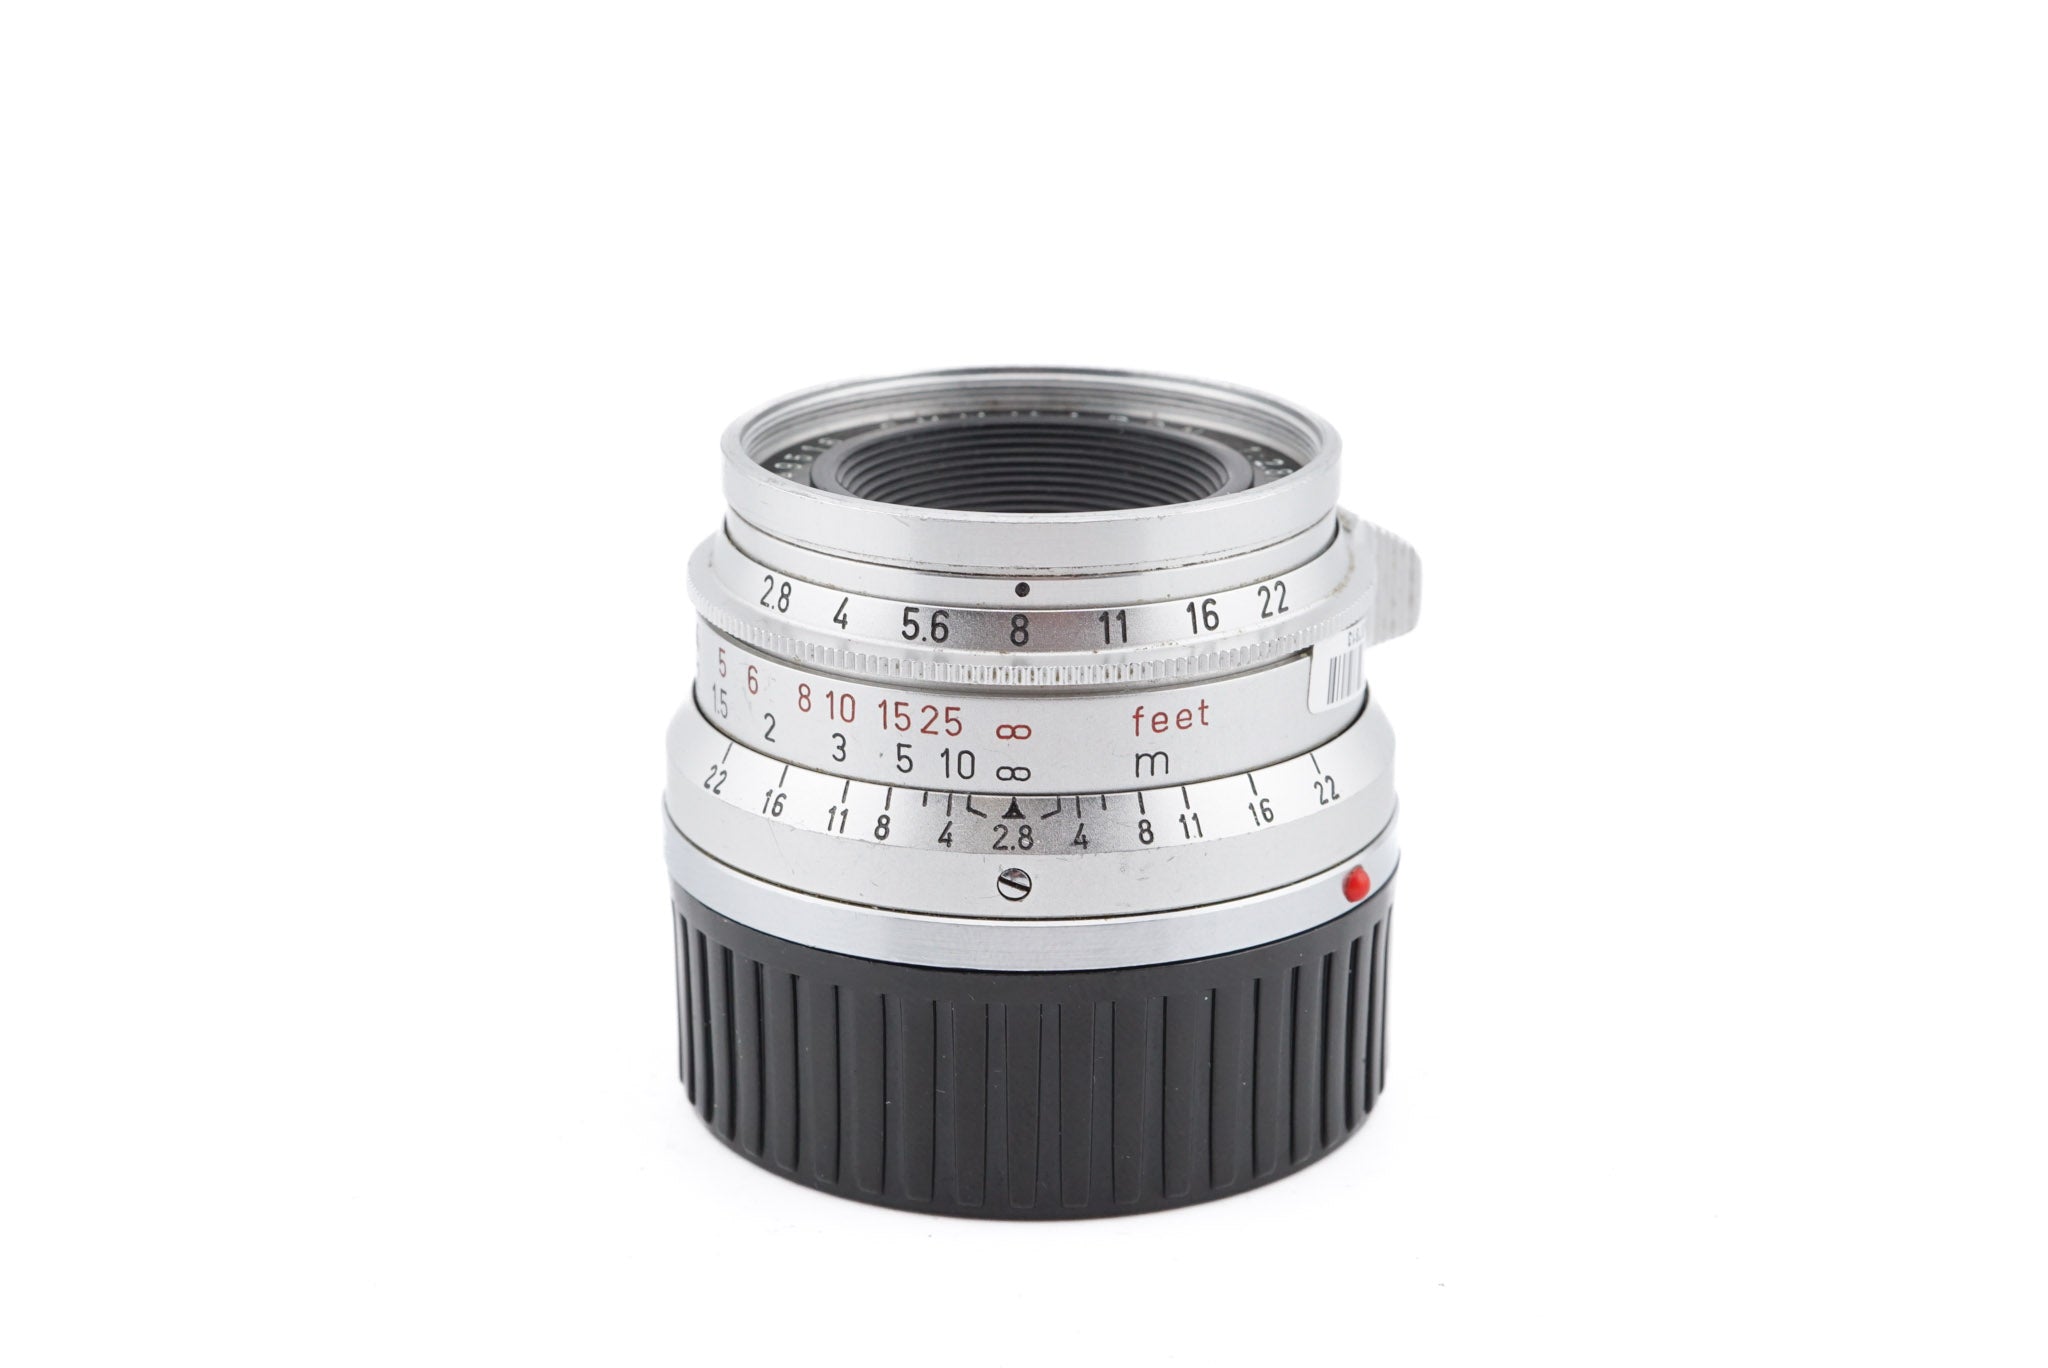 Leica 35mm f2.8 Summaron - Lens